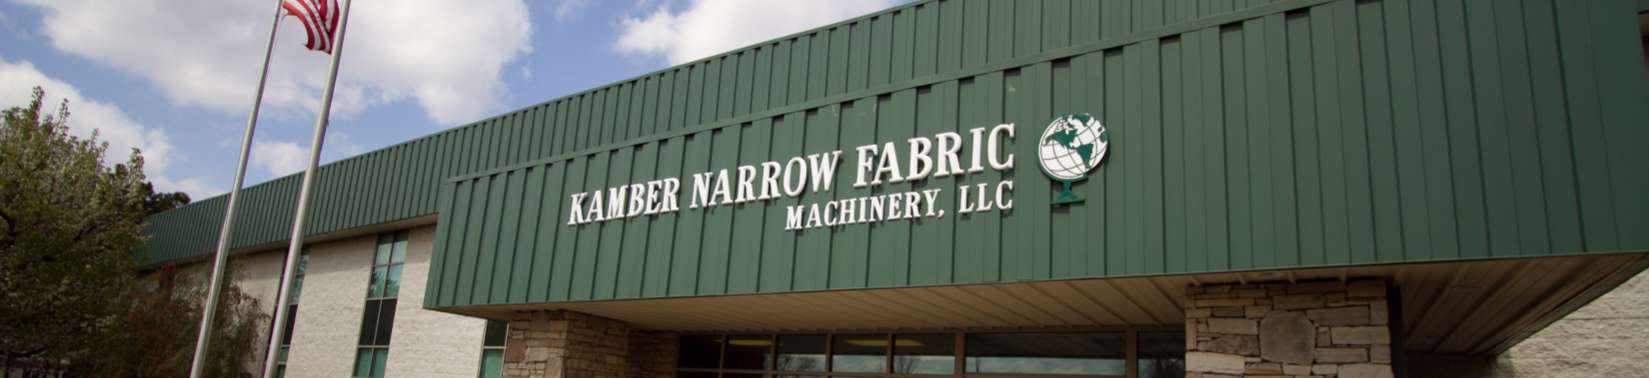 Storefront of Kamber Narrow Fabric Machinery